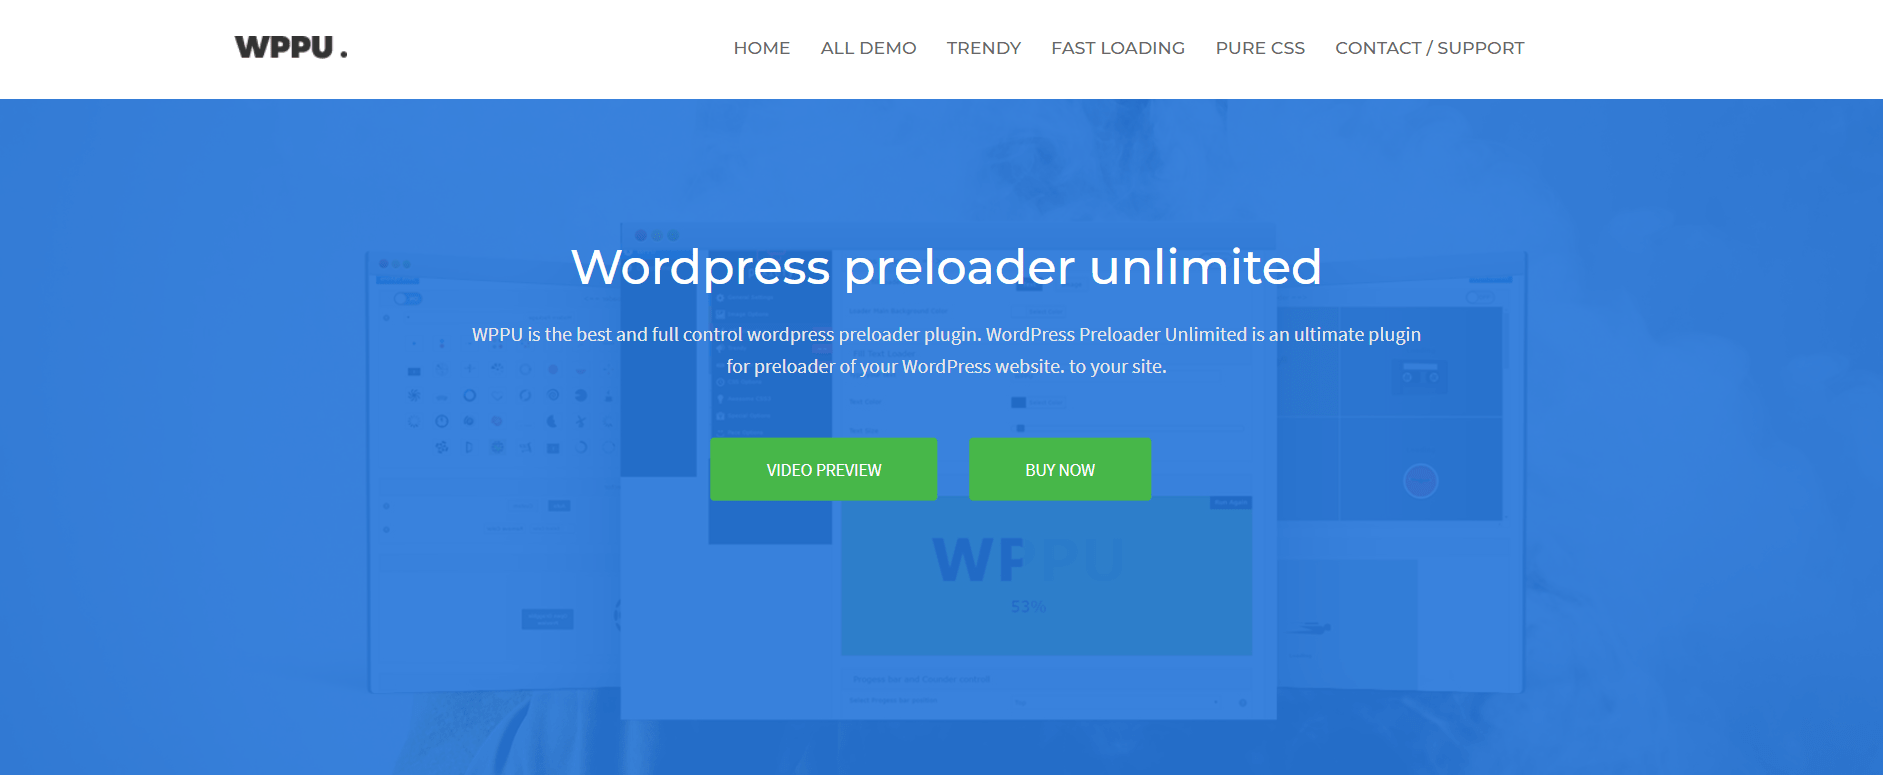 WordPress Preloader plugins - WordPress Preloader Unlimited